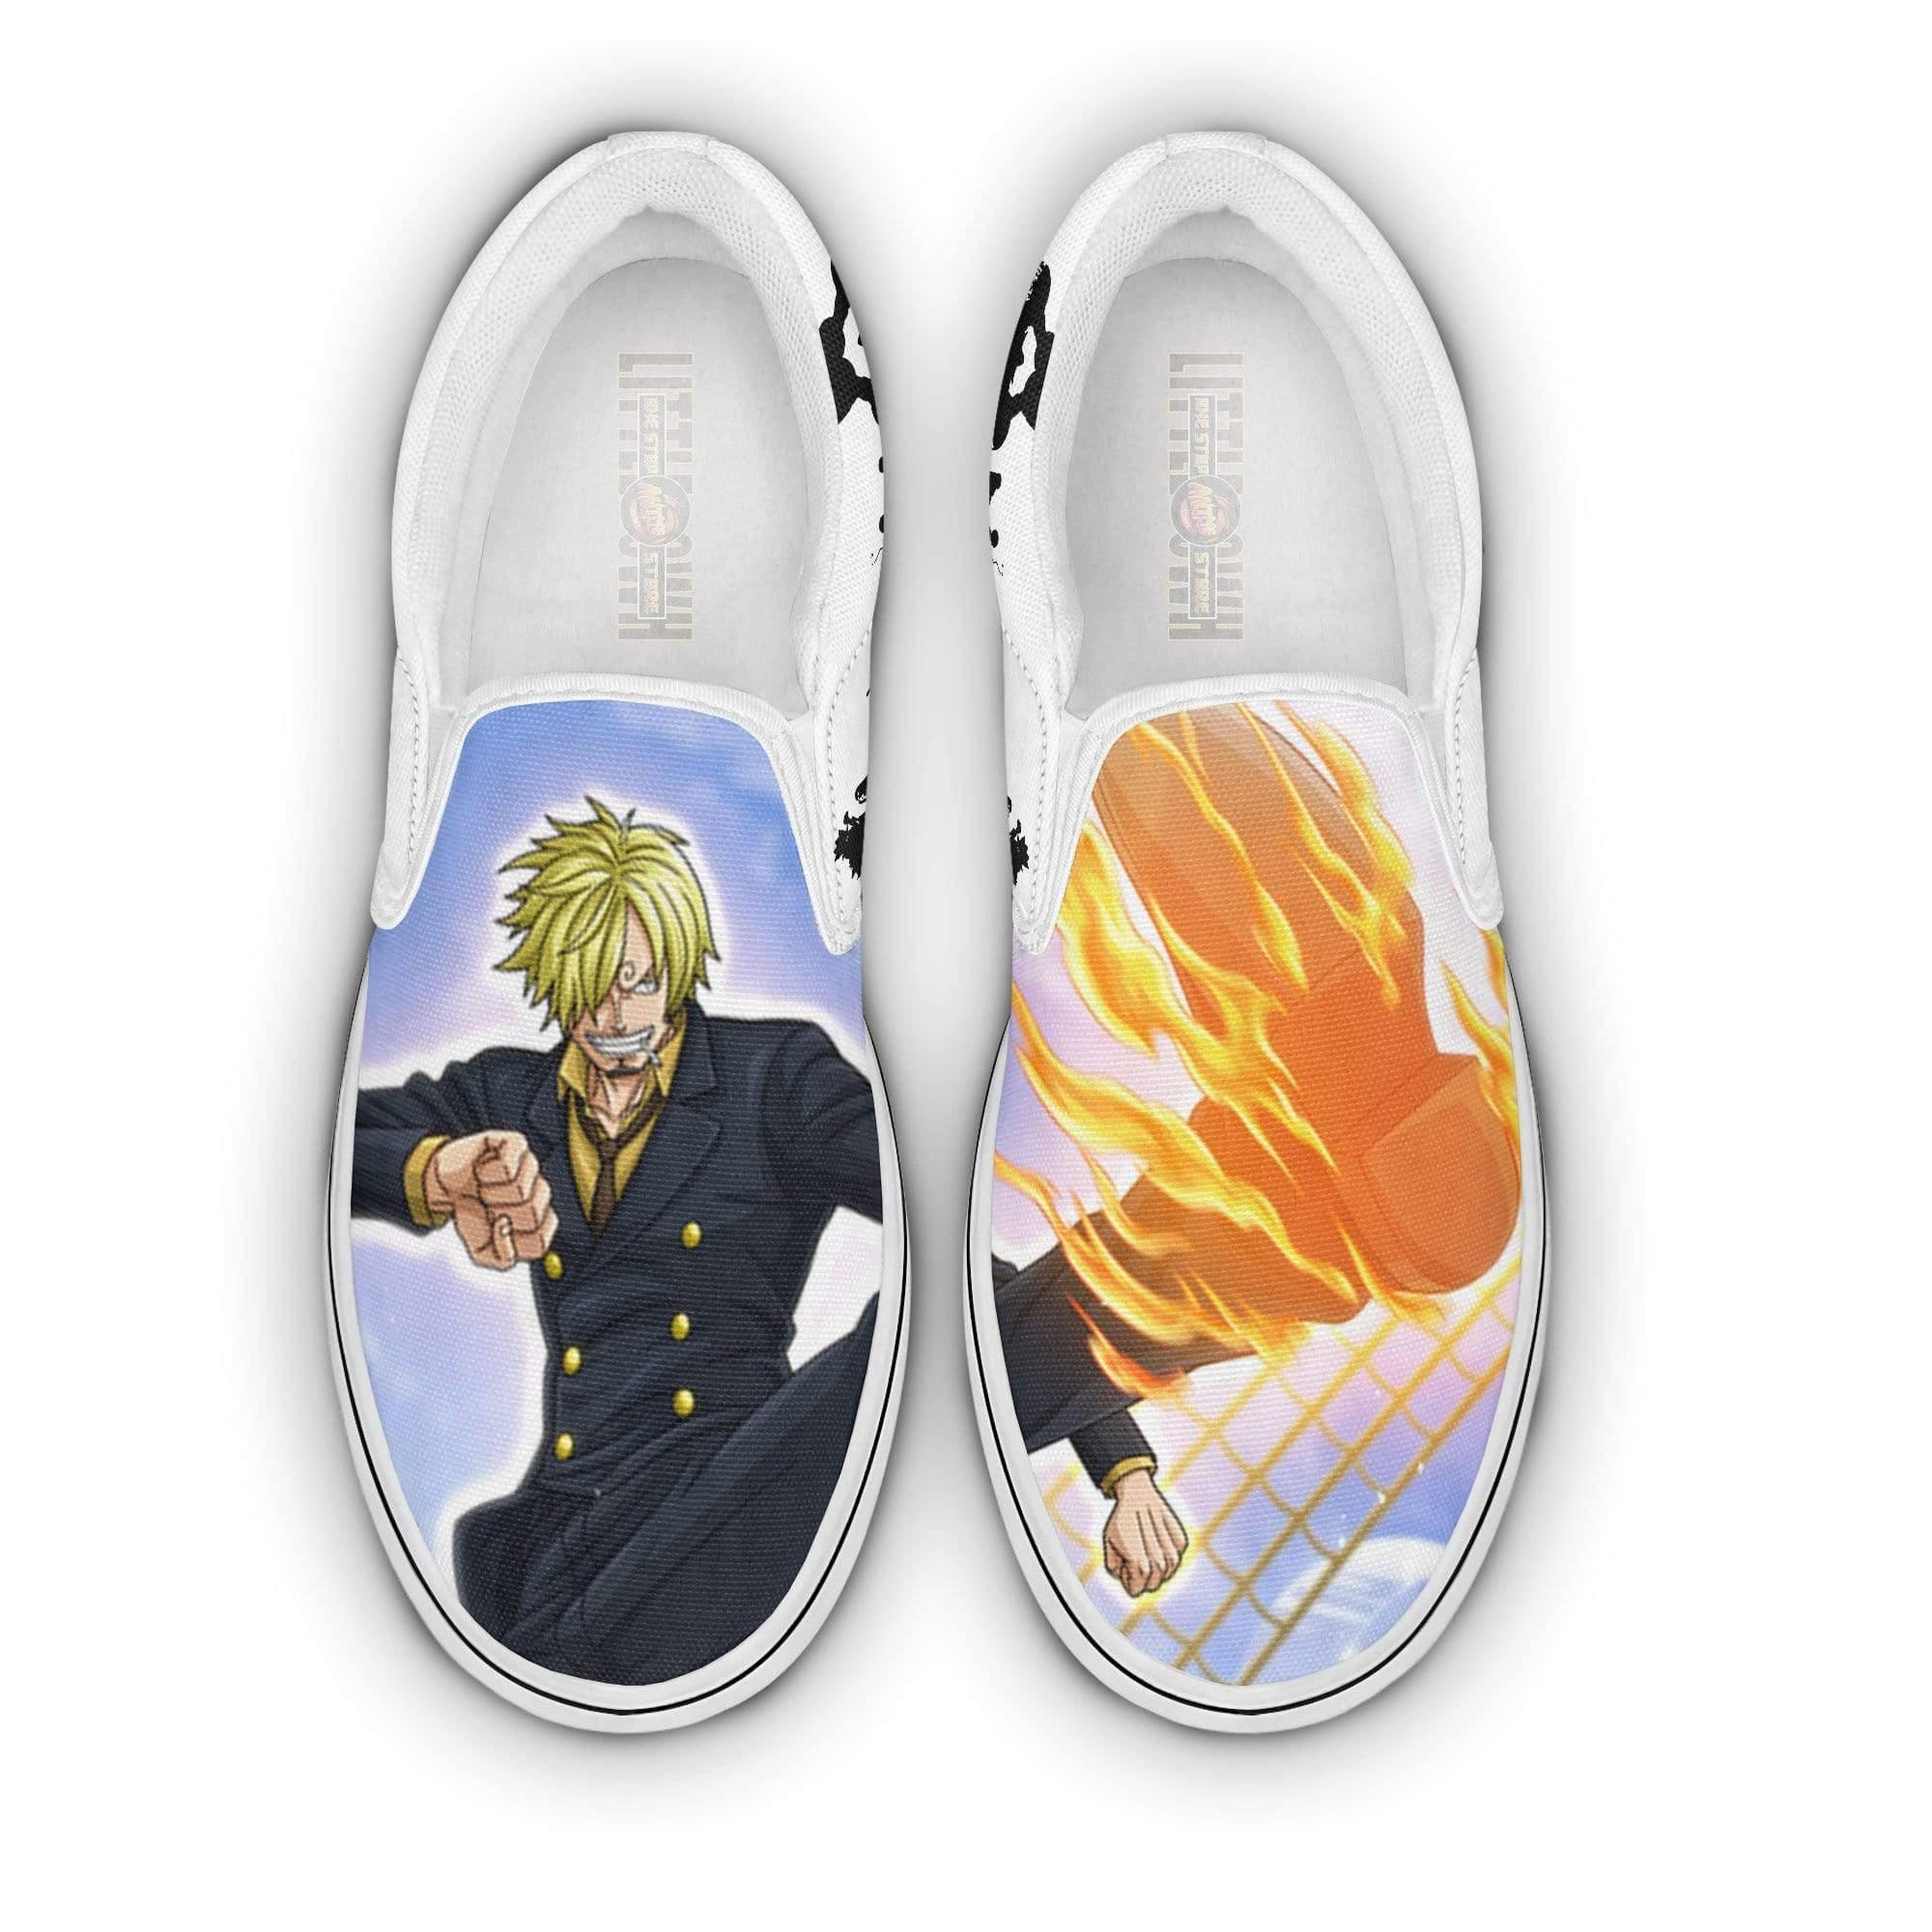 Vinsmoke Sanji Classic Slip-On Custom One Piece Anime Shoes